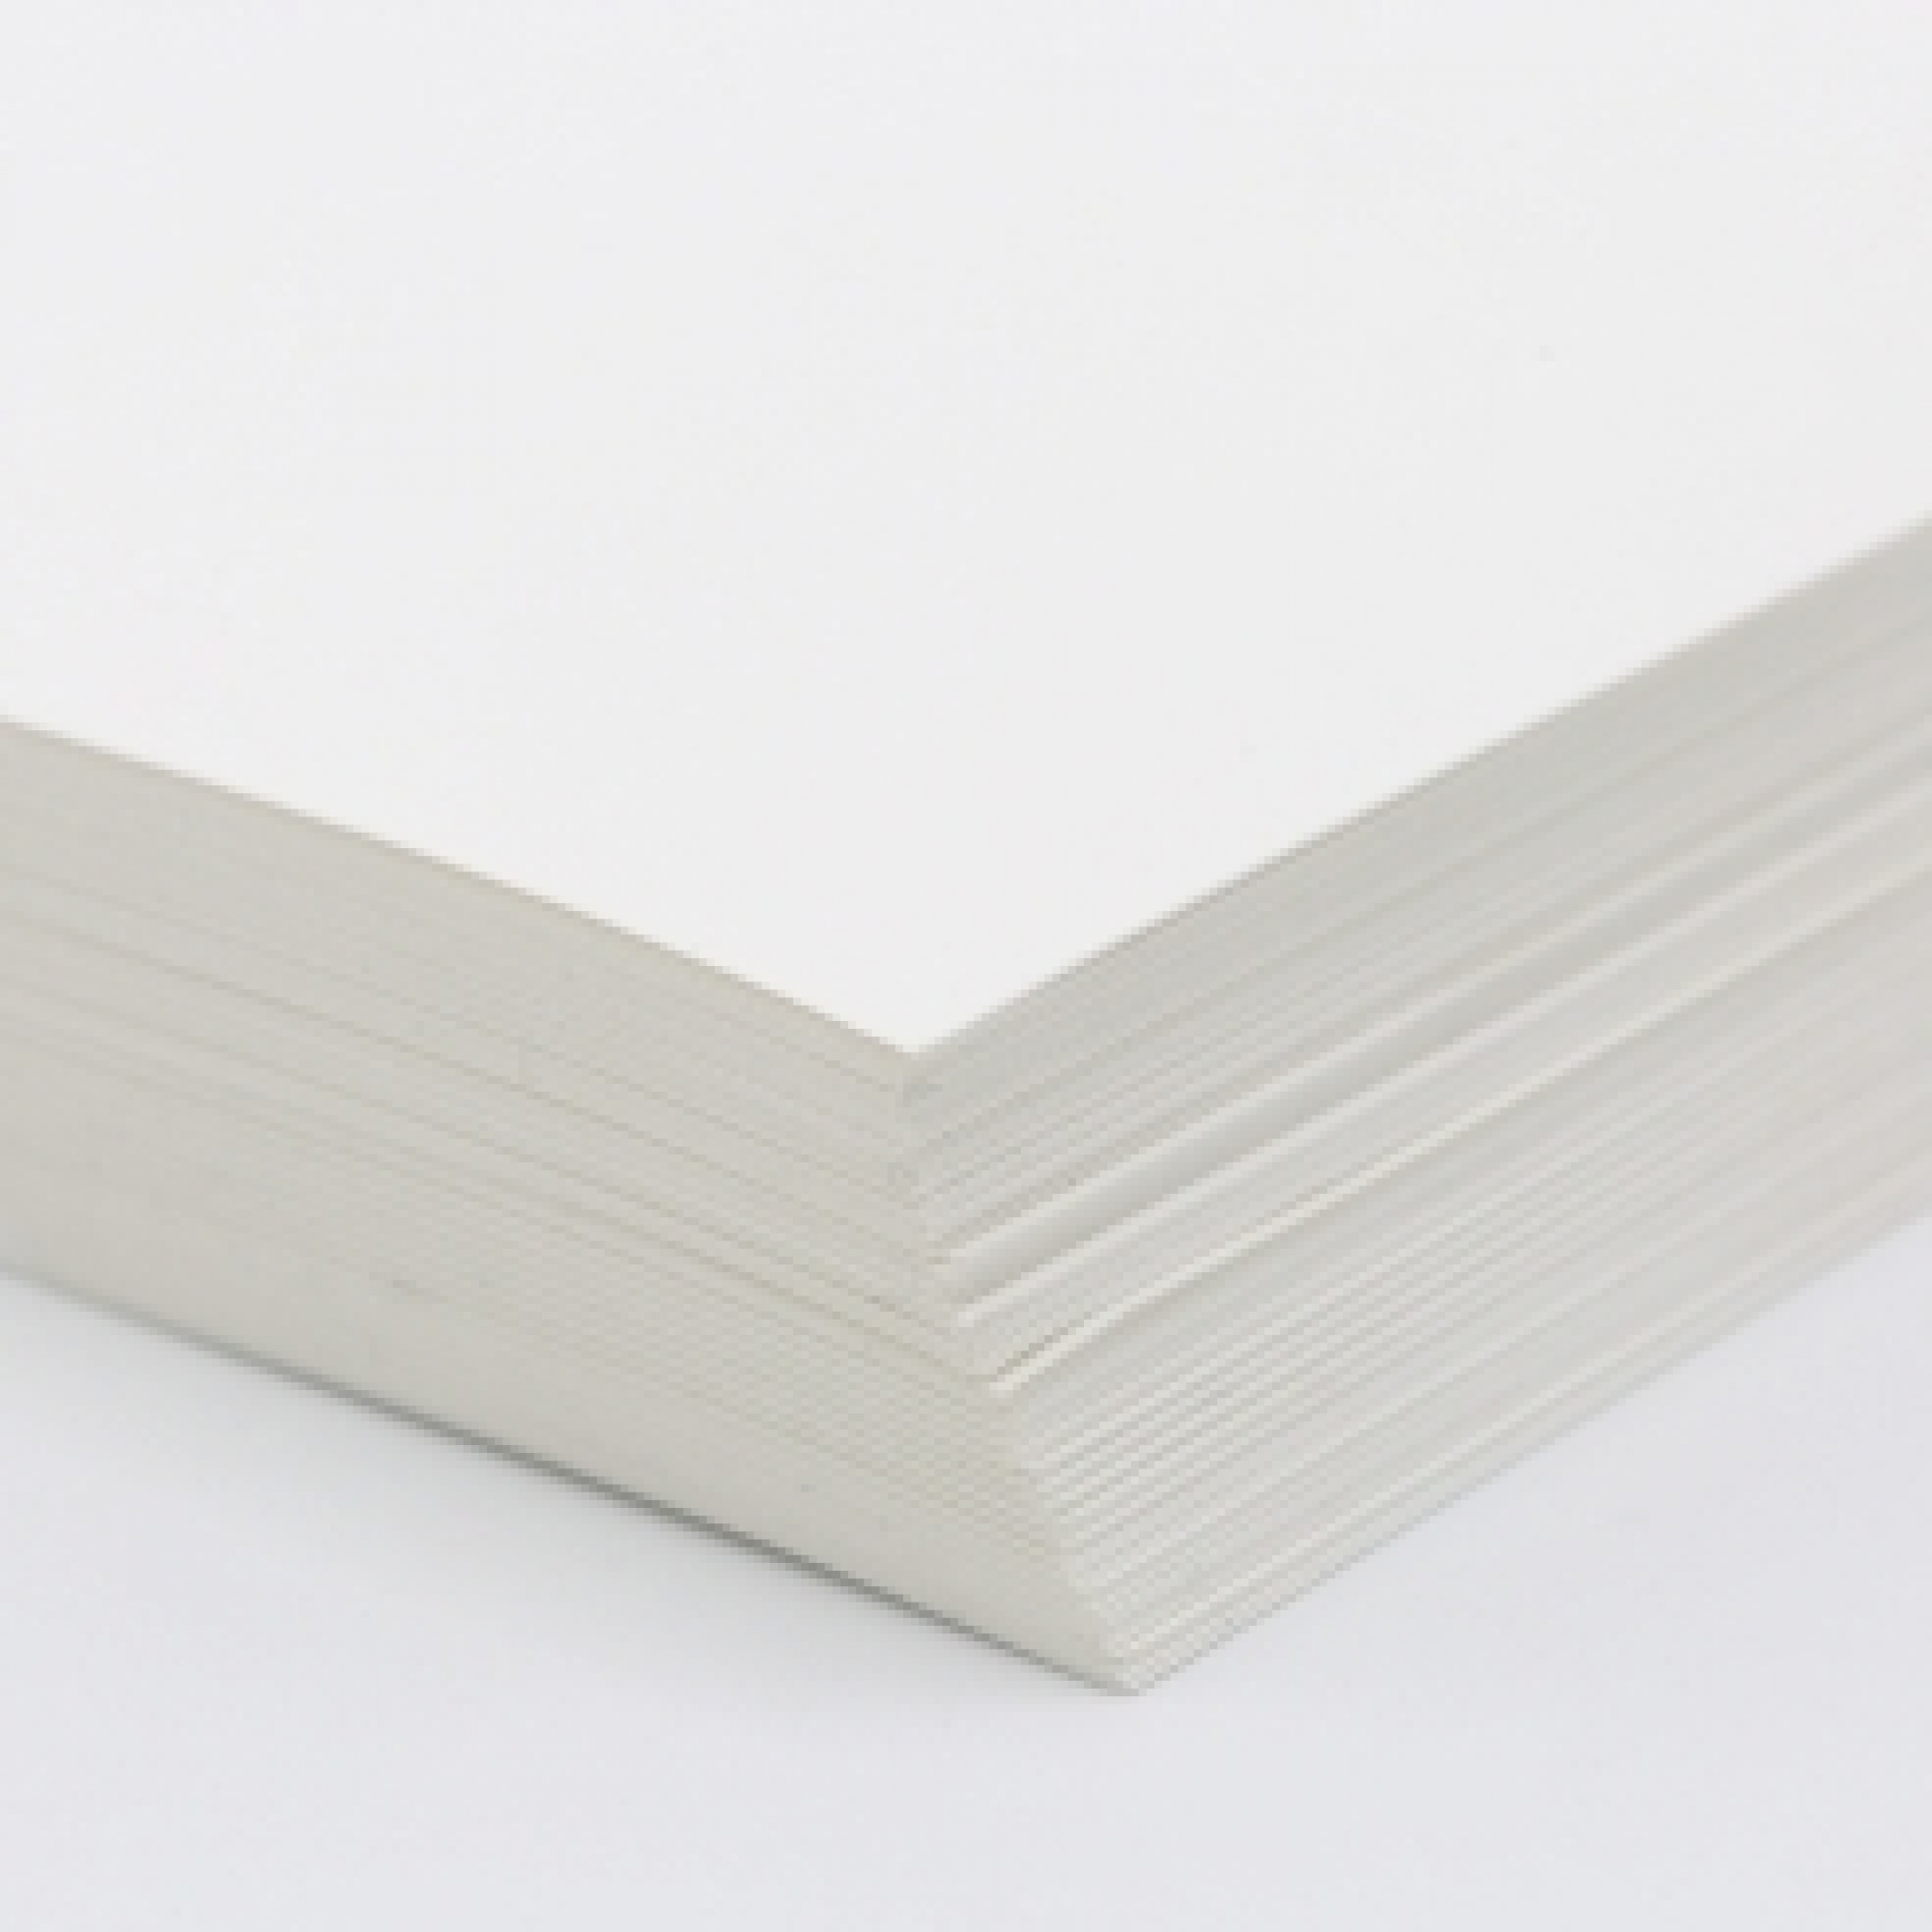 Futura White Card Stock - 8 1/2 x 11 in 80 lb Cover Gloss C/2S 250 per  Package